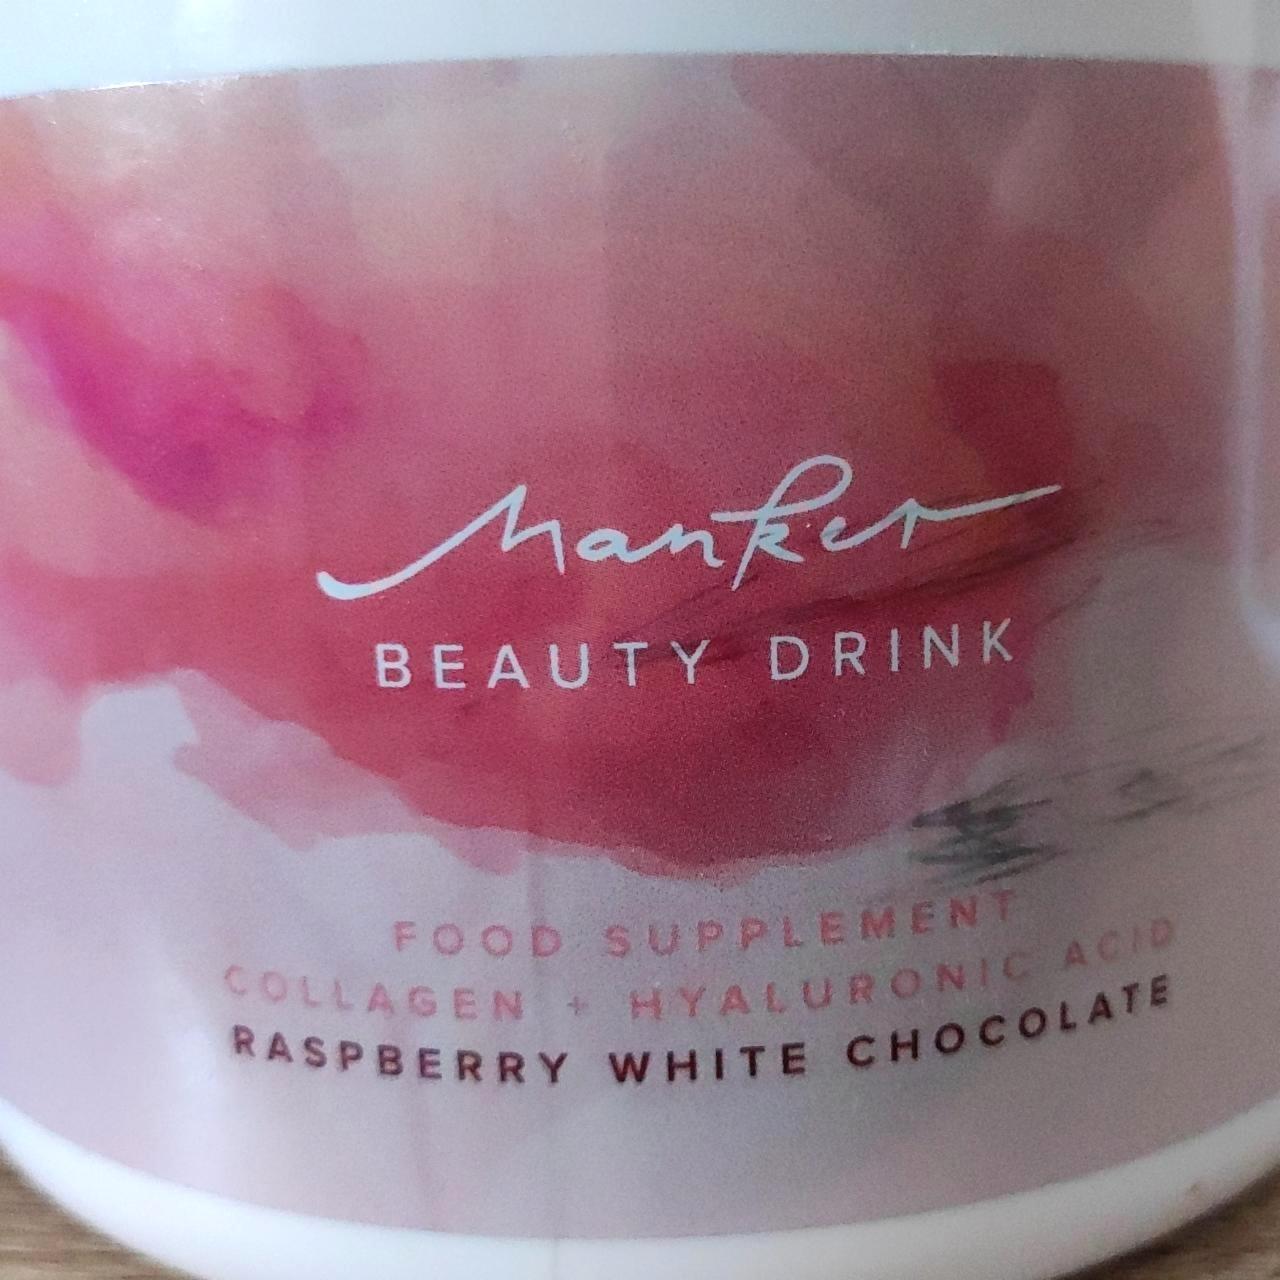 Képek - Beauty drink Raspberry white chocolate Manker